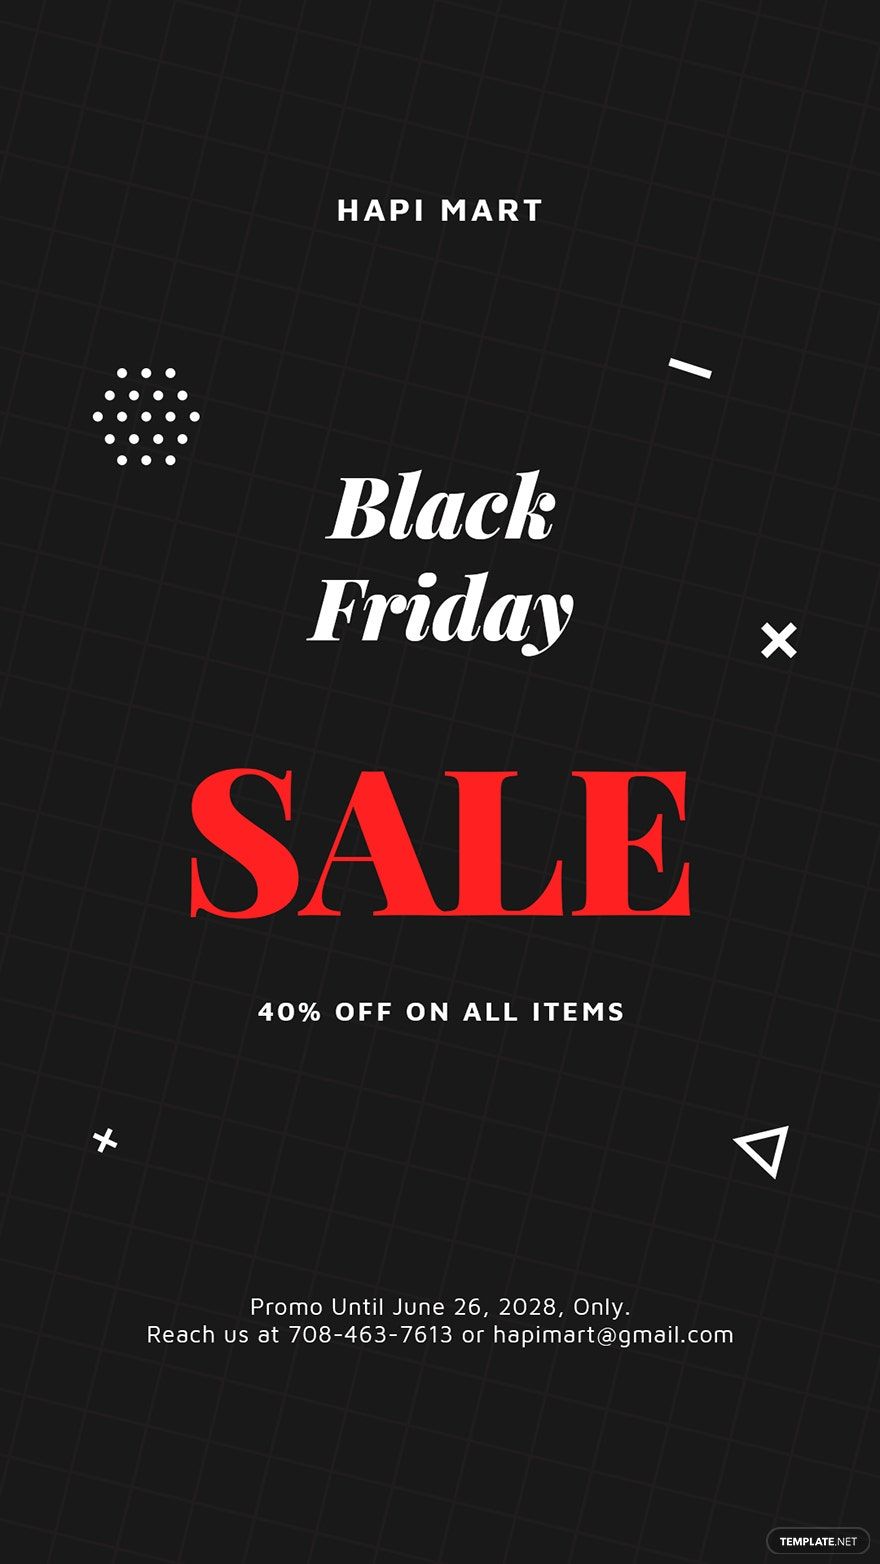 Black Friday Sale Whatsapp image Template